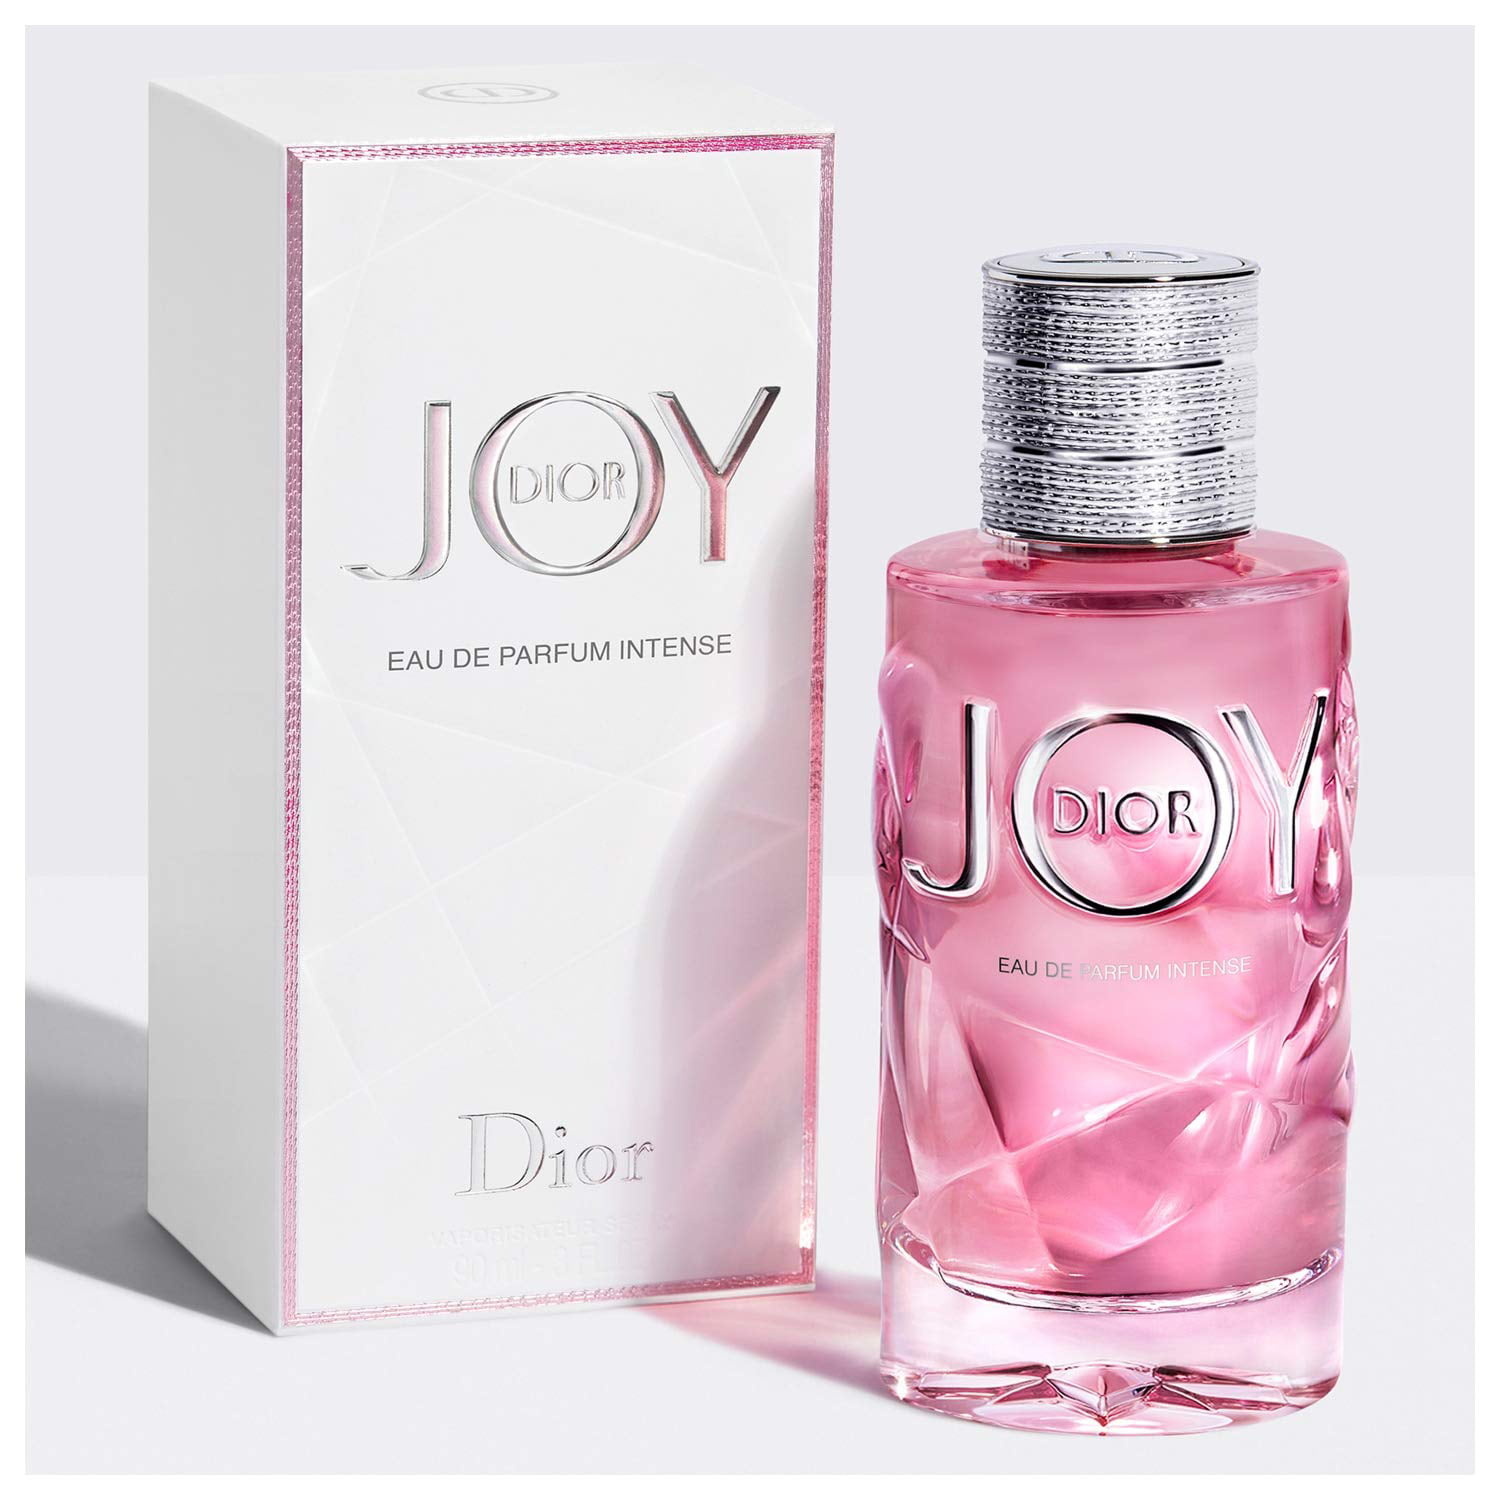 joy perfume by christian dior